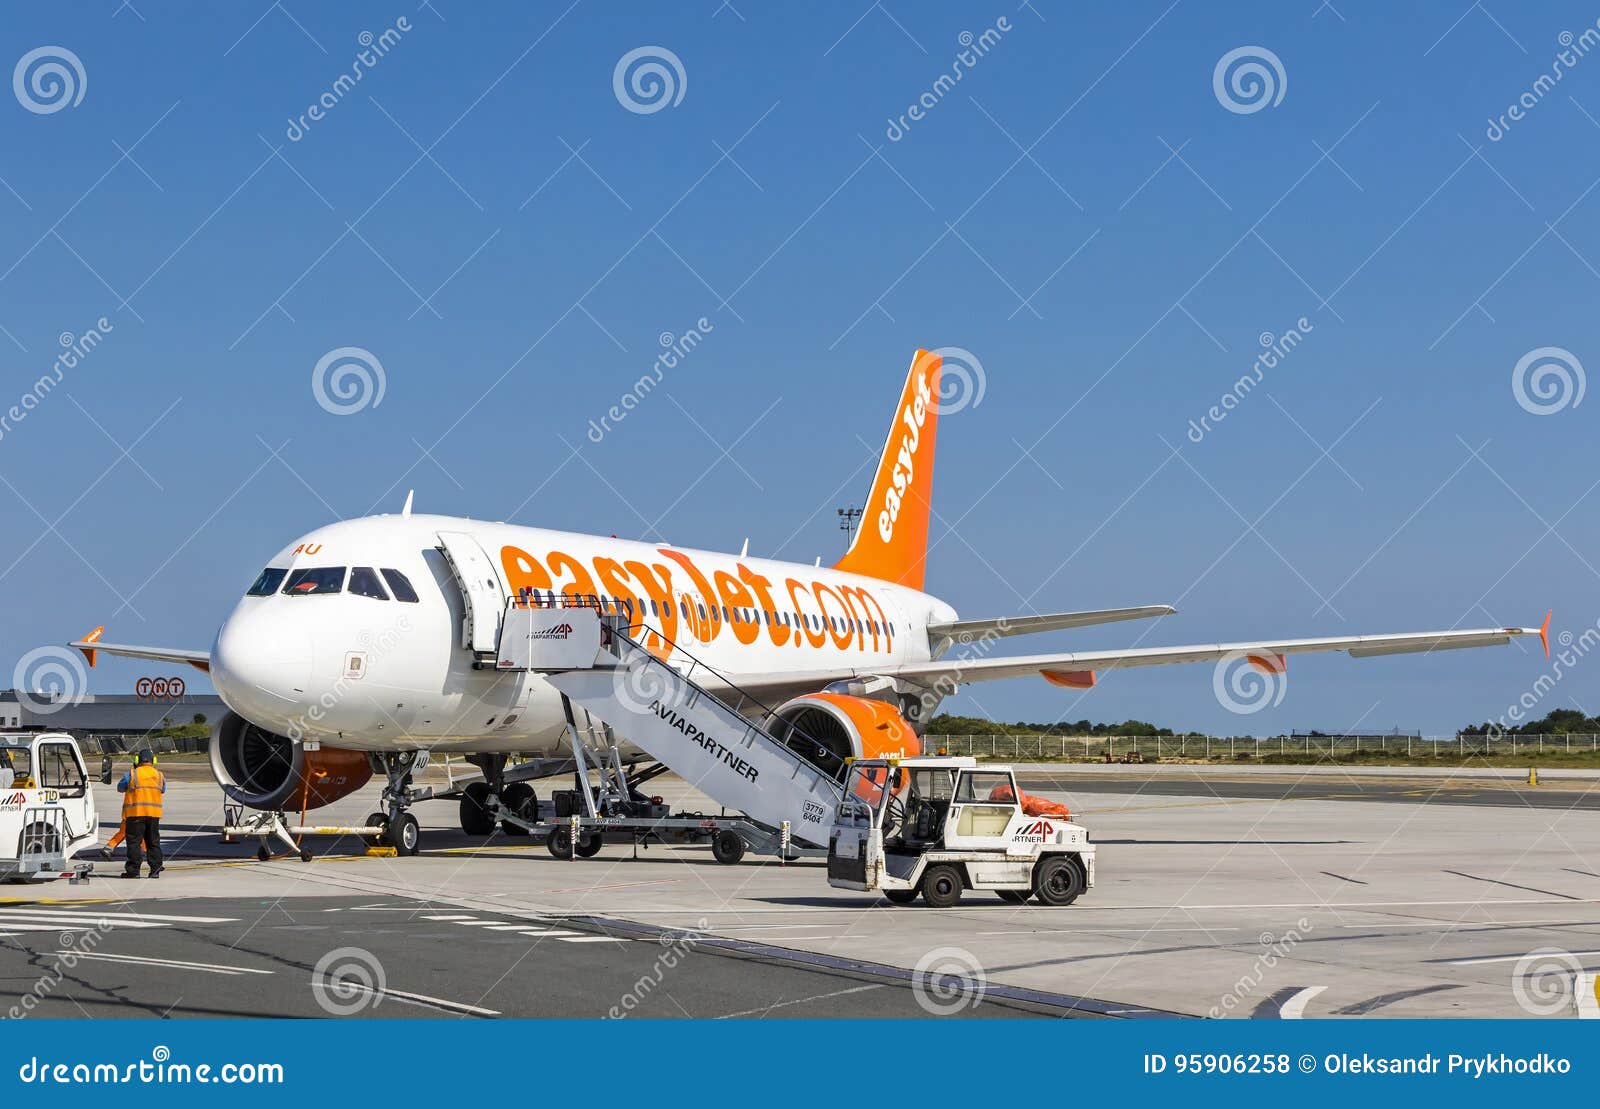 Airbus A319111 EasyJet in BordeauxMerignac Airport Editorial Stock